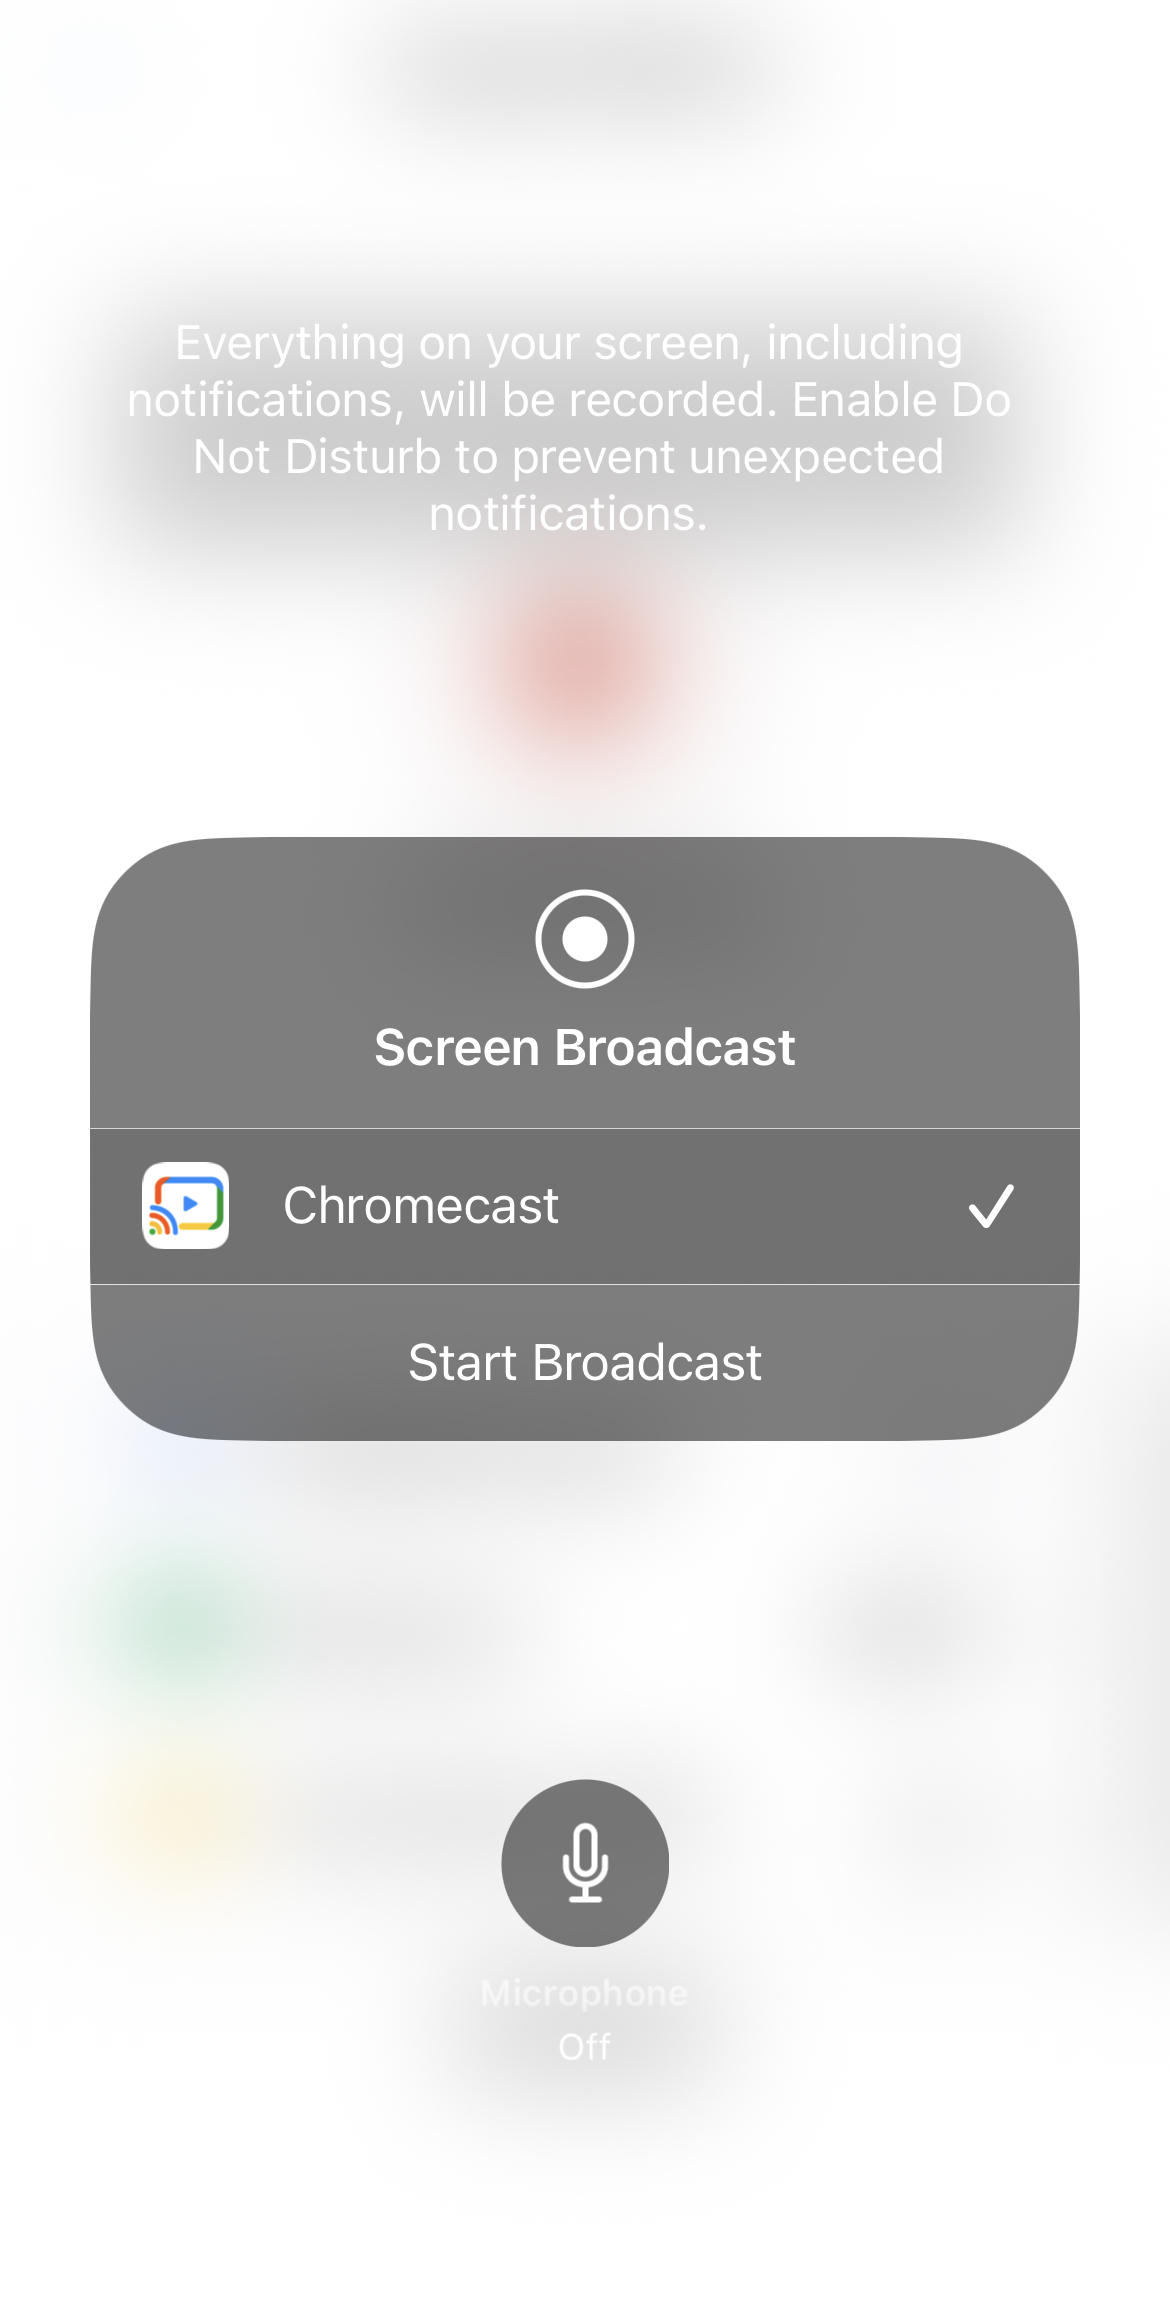 Broadcasting iPhone's screen via Streamer for Chromecast TVs